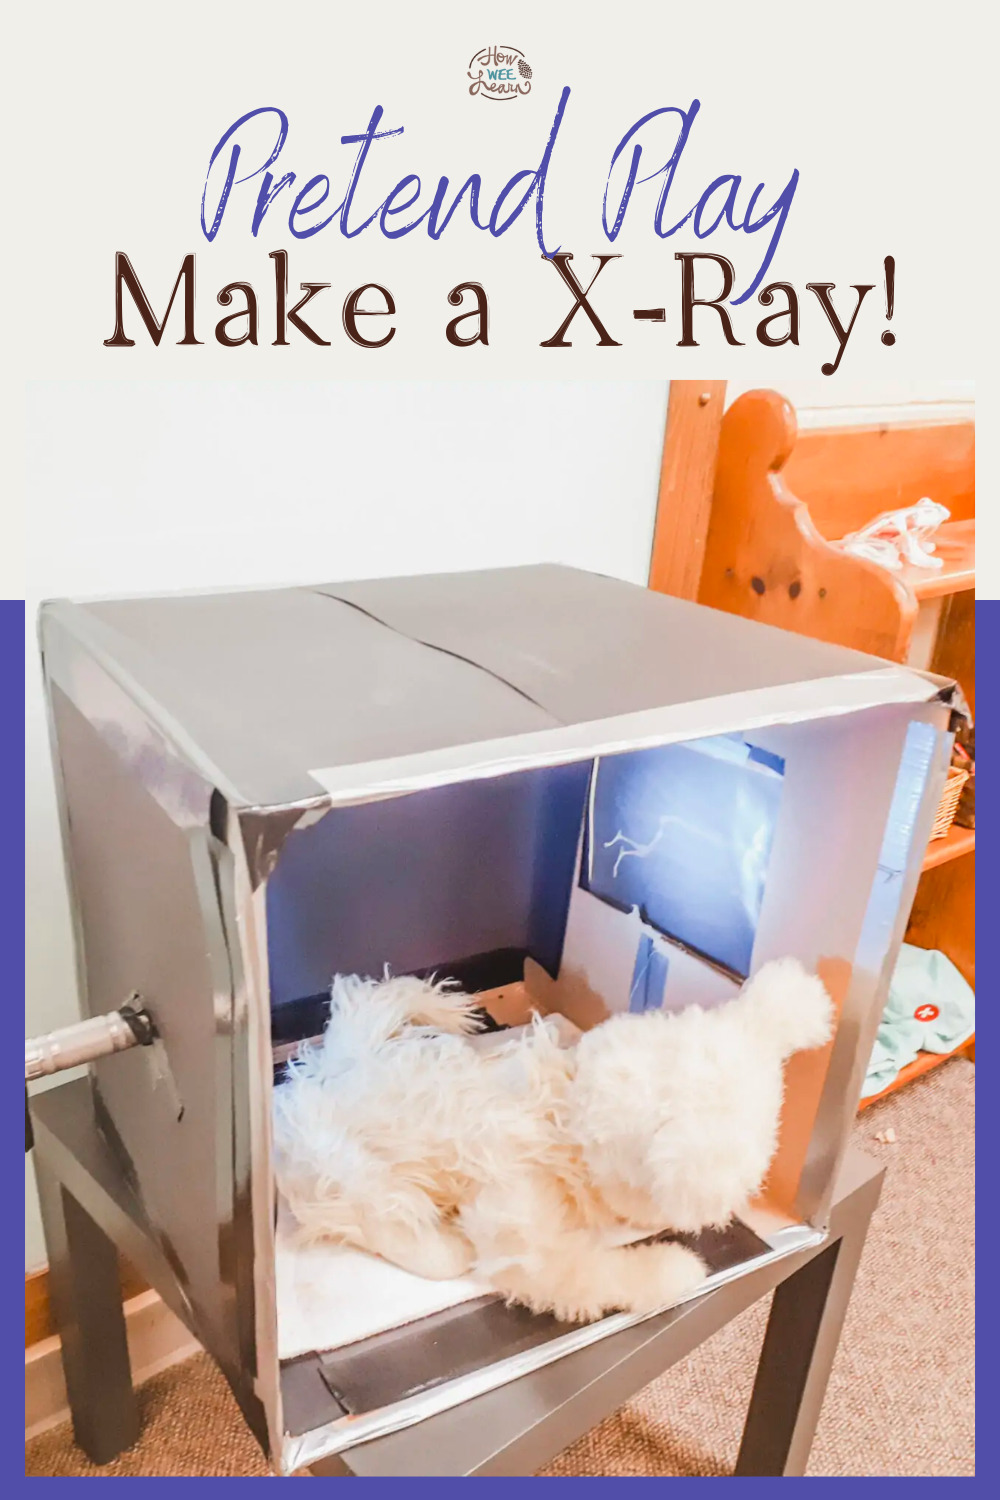 A stuffed bear in a homemade x-ray machine made from a cardboard box in a preschool classroom